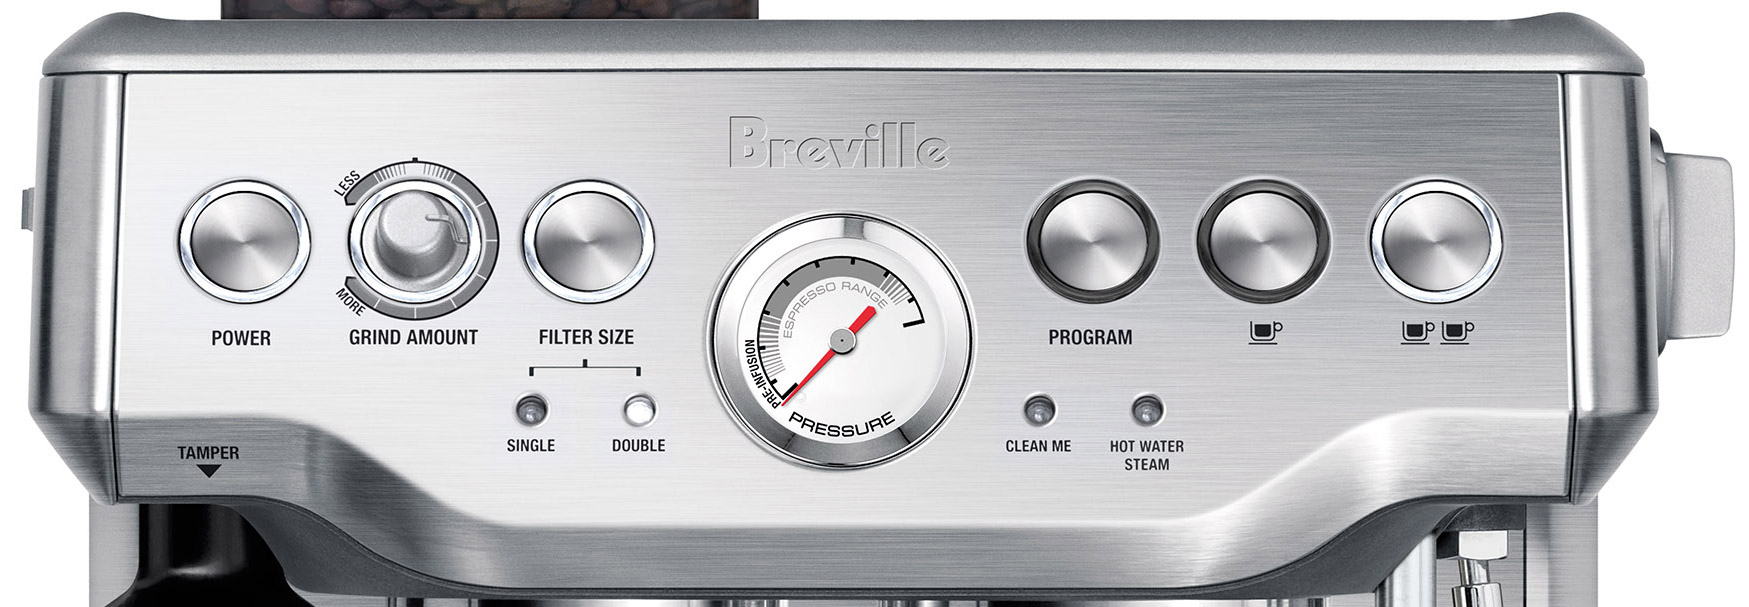 Breville 67 Oz Barista Express Espresso Machine in Brushed Stainless Steel